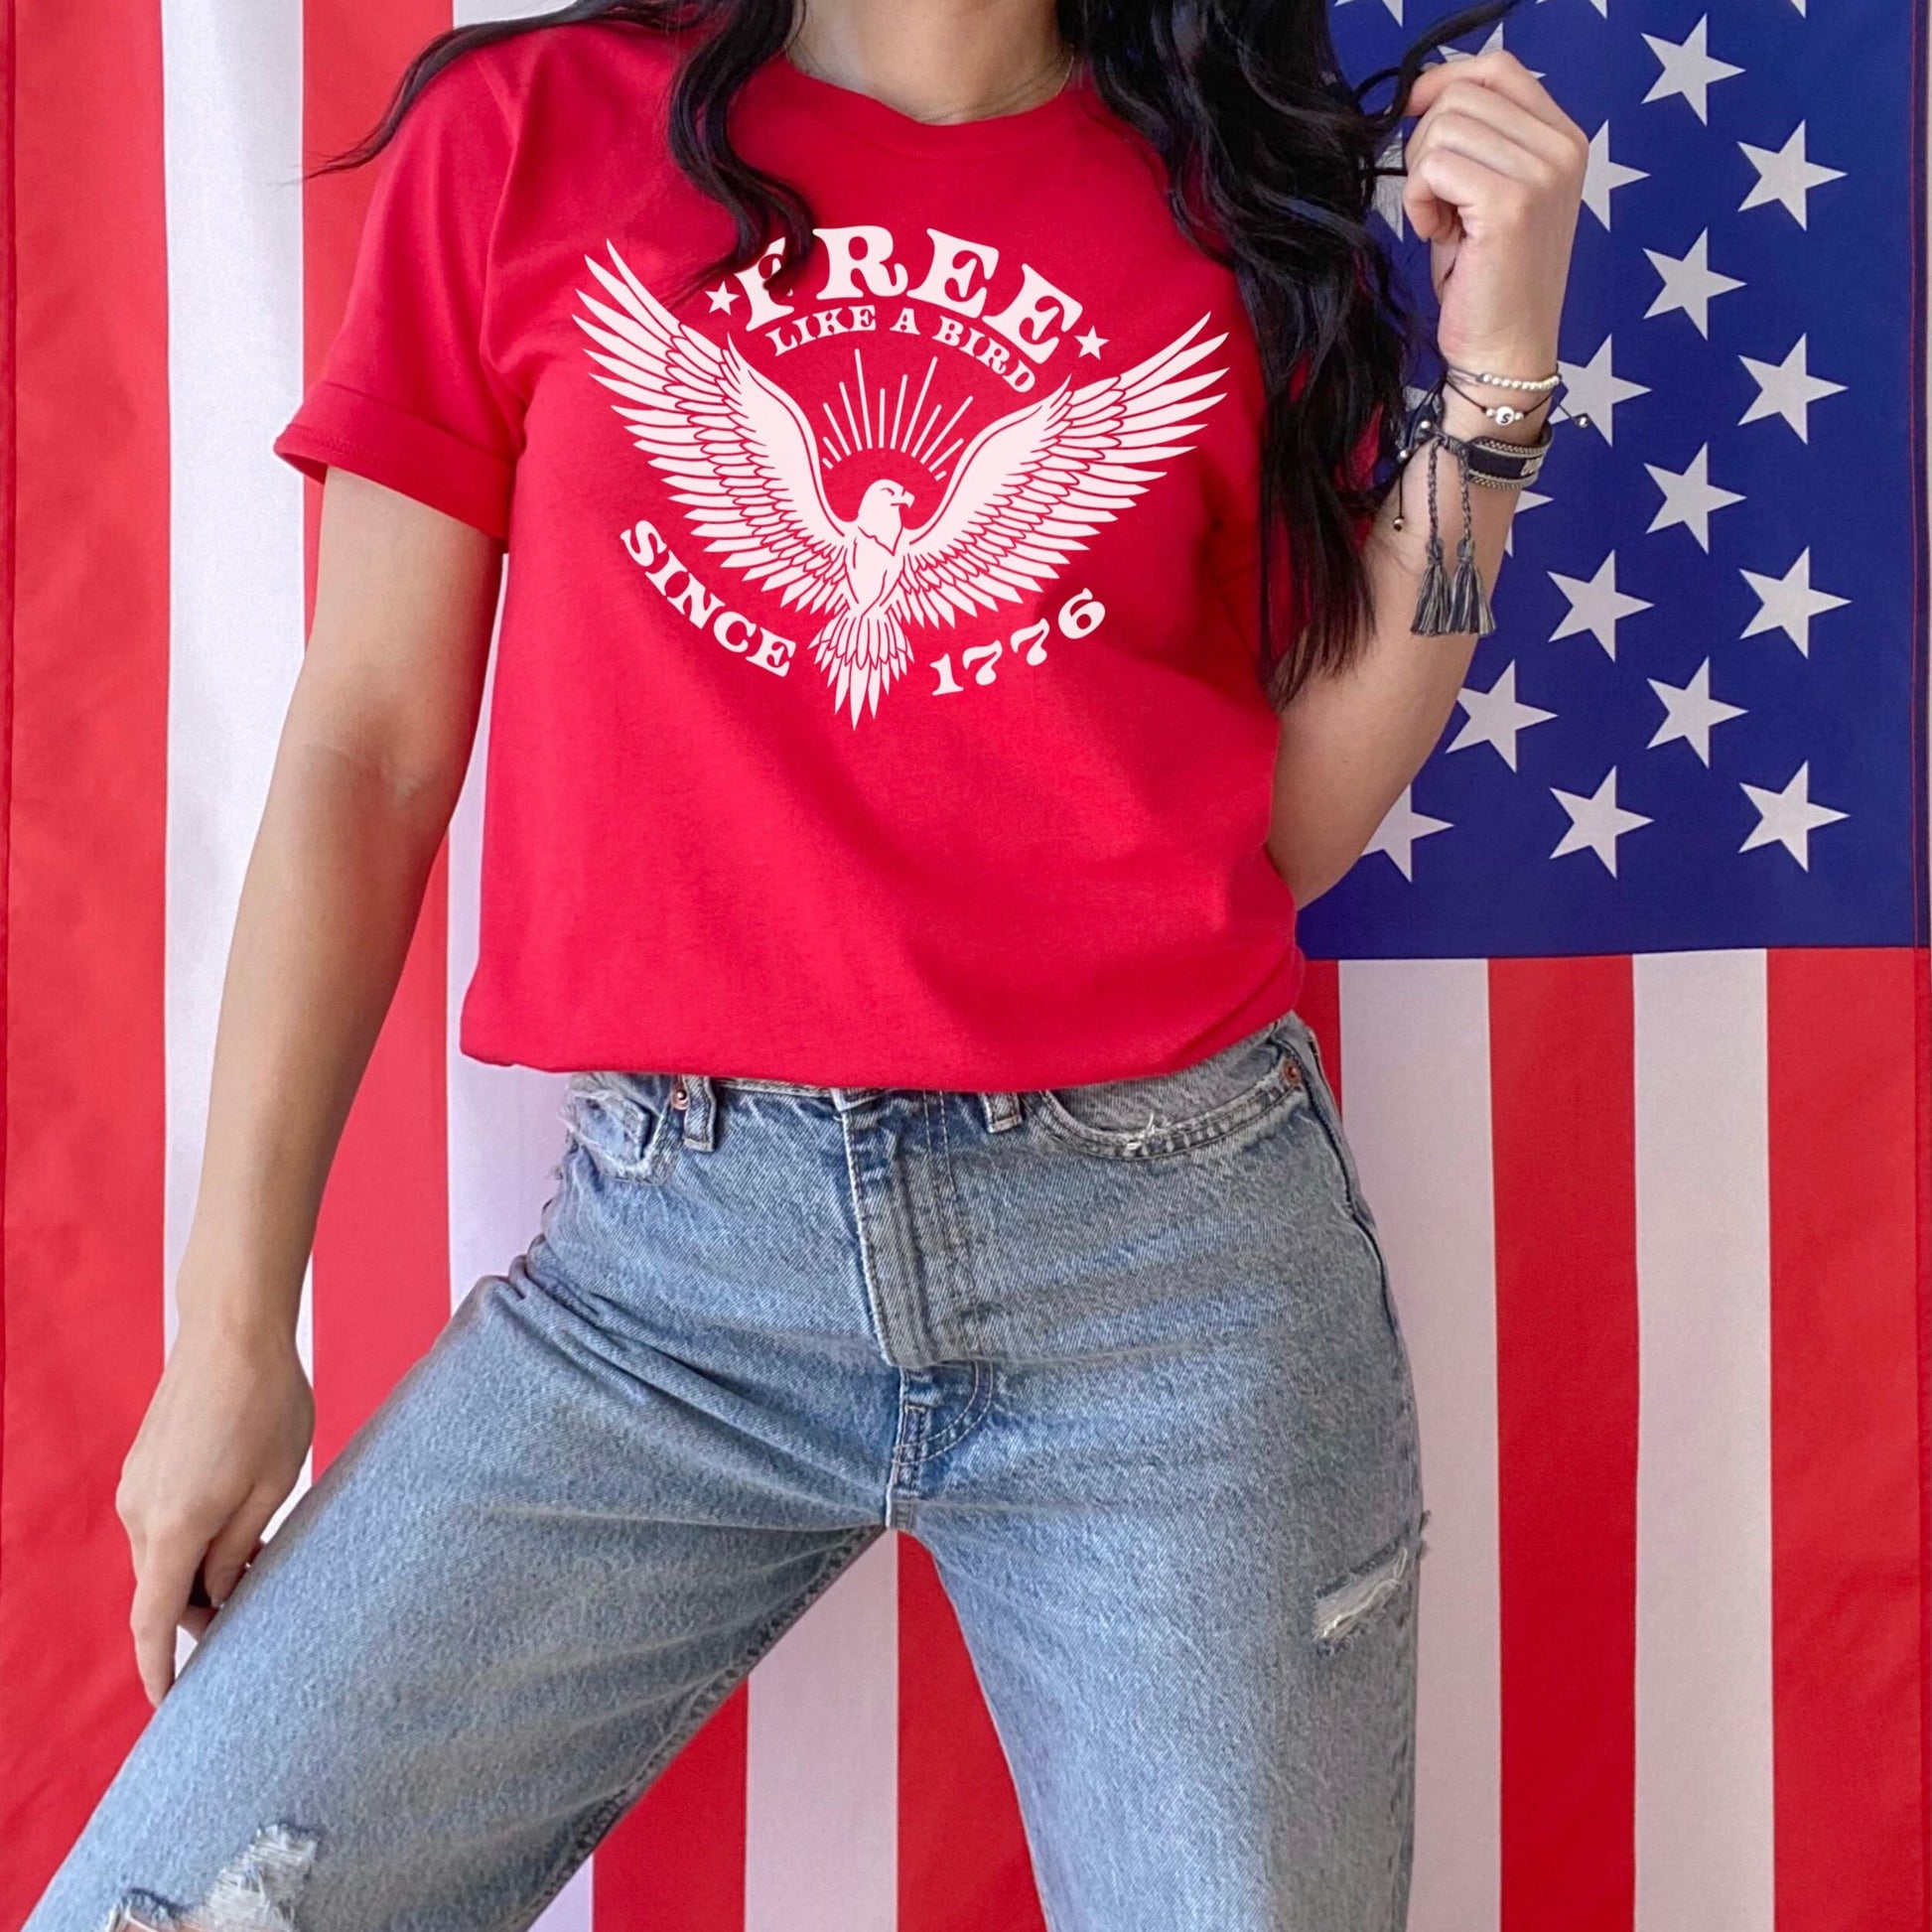 Free Like a Bird Since 1776 t-shirt • 4th of July Shirt